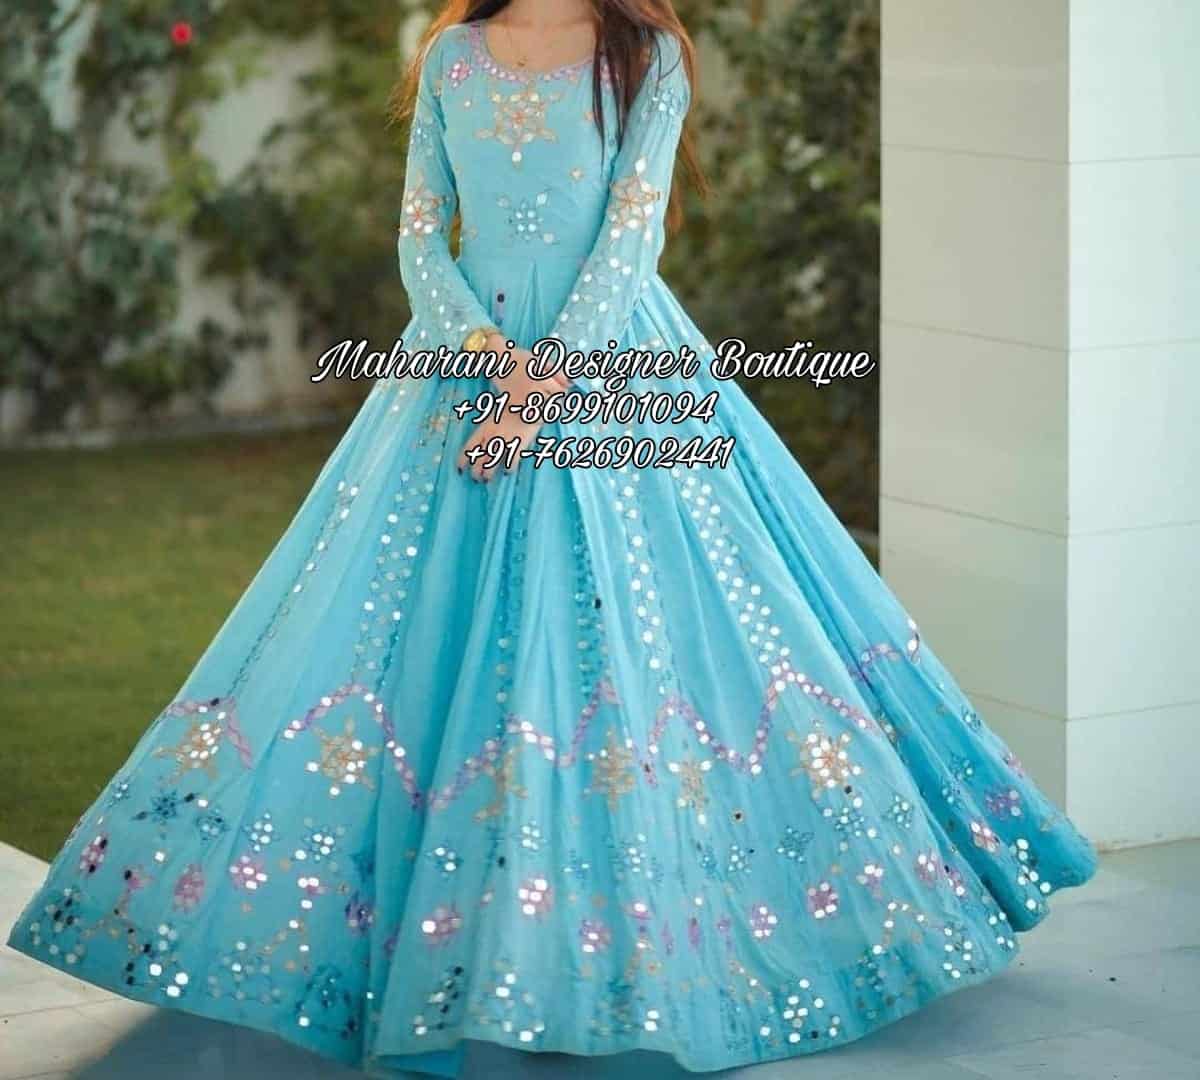 Designer Boutique Dresses Online| Maharani Designer Boutique